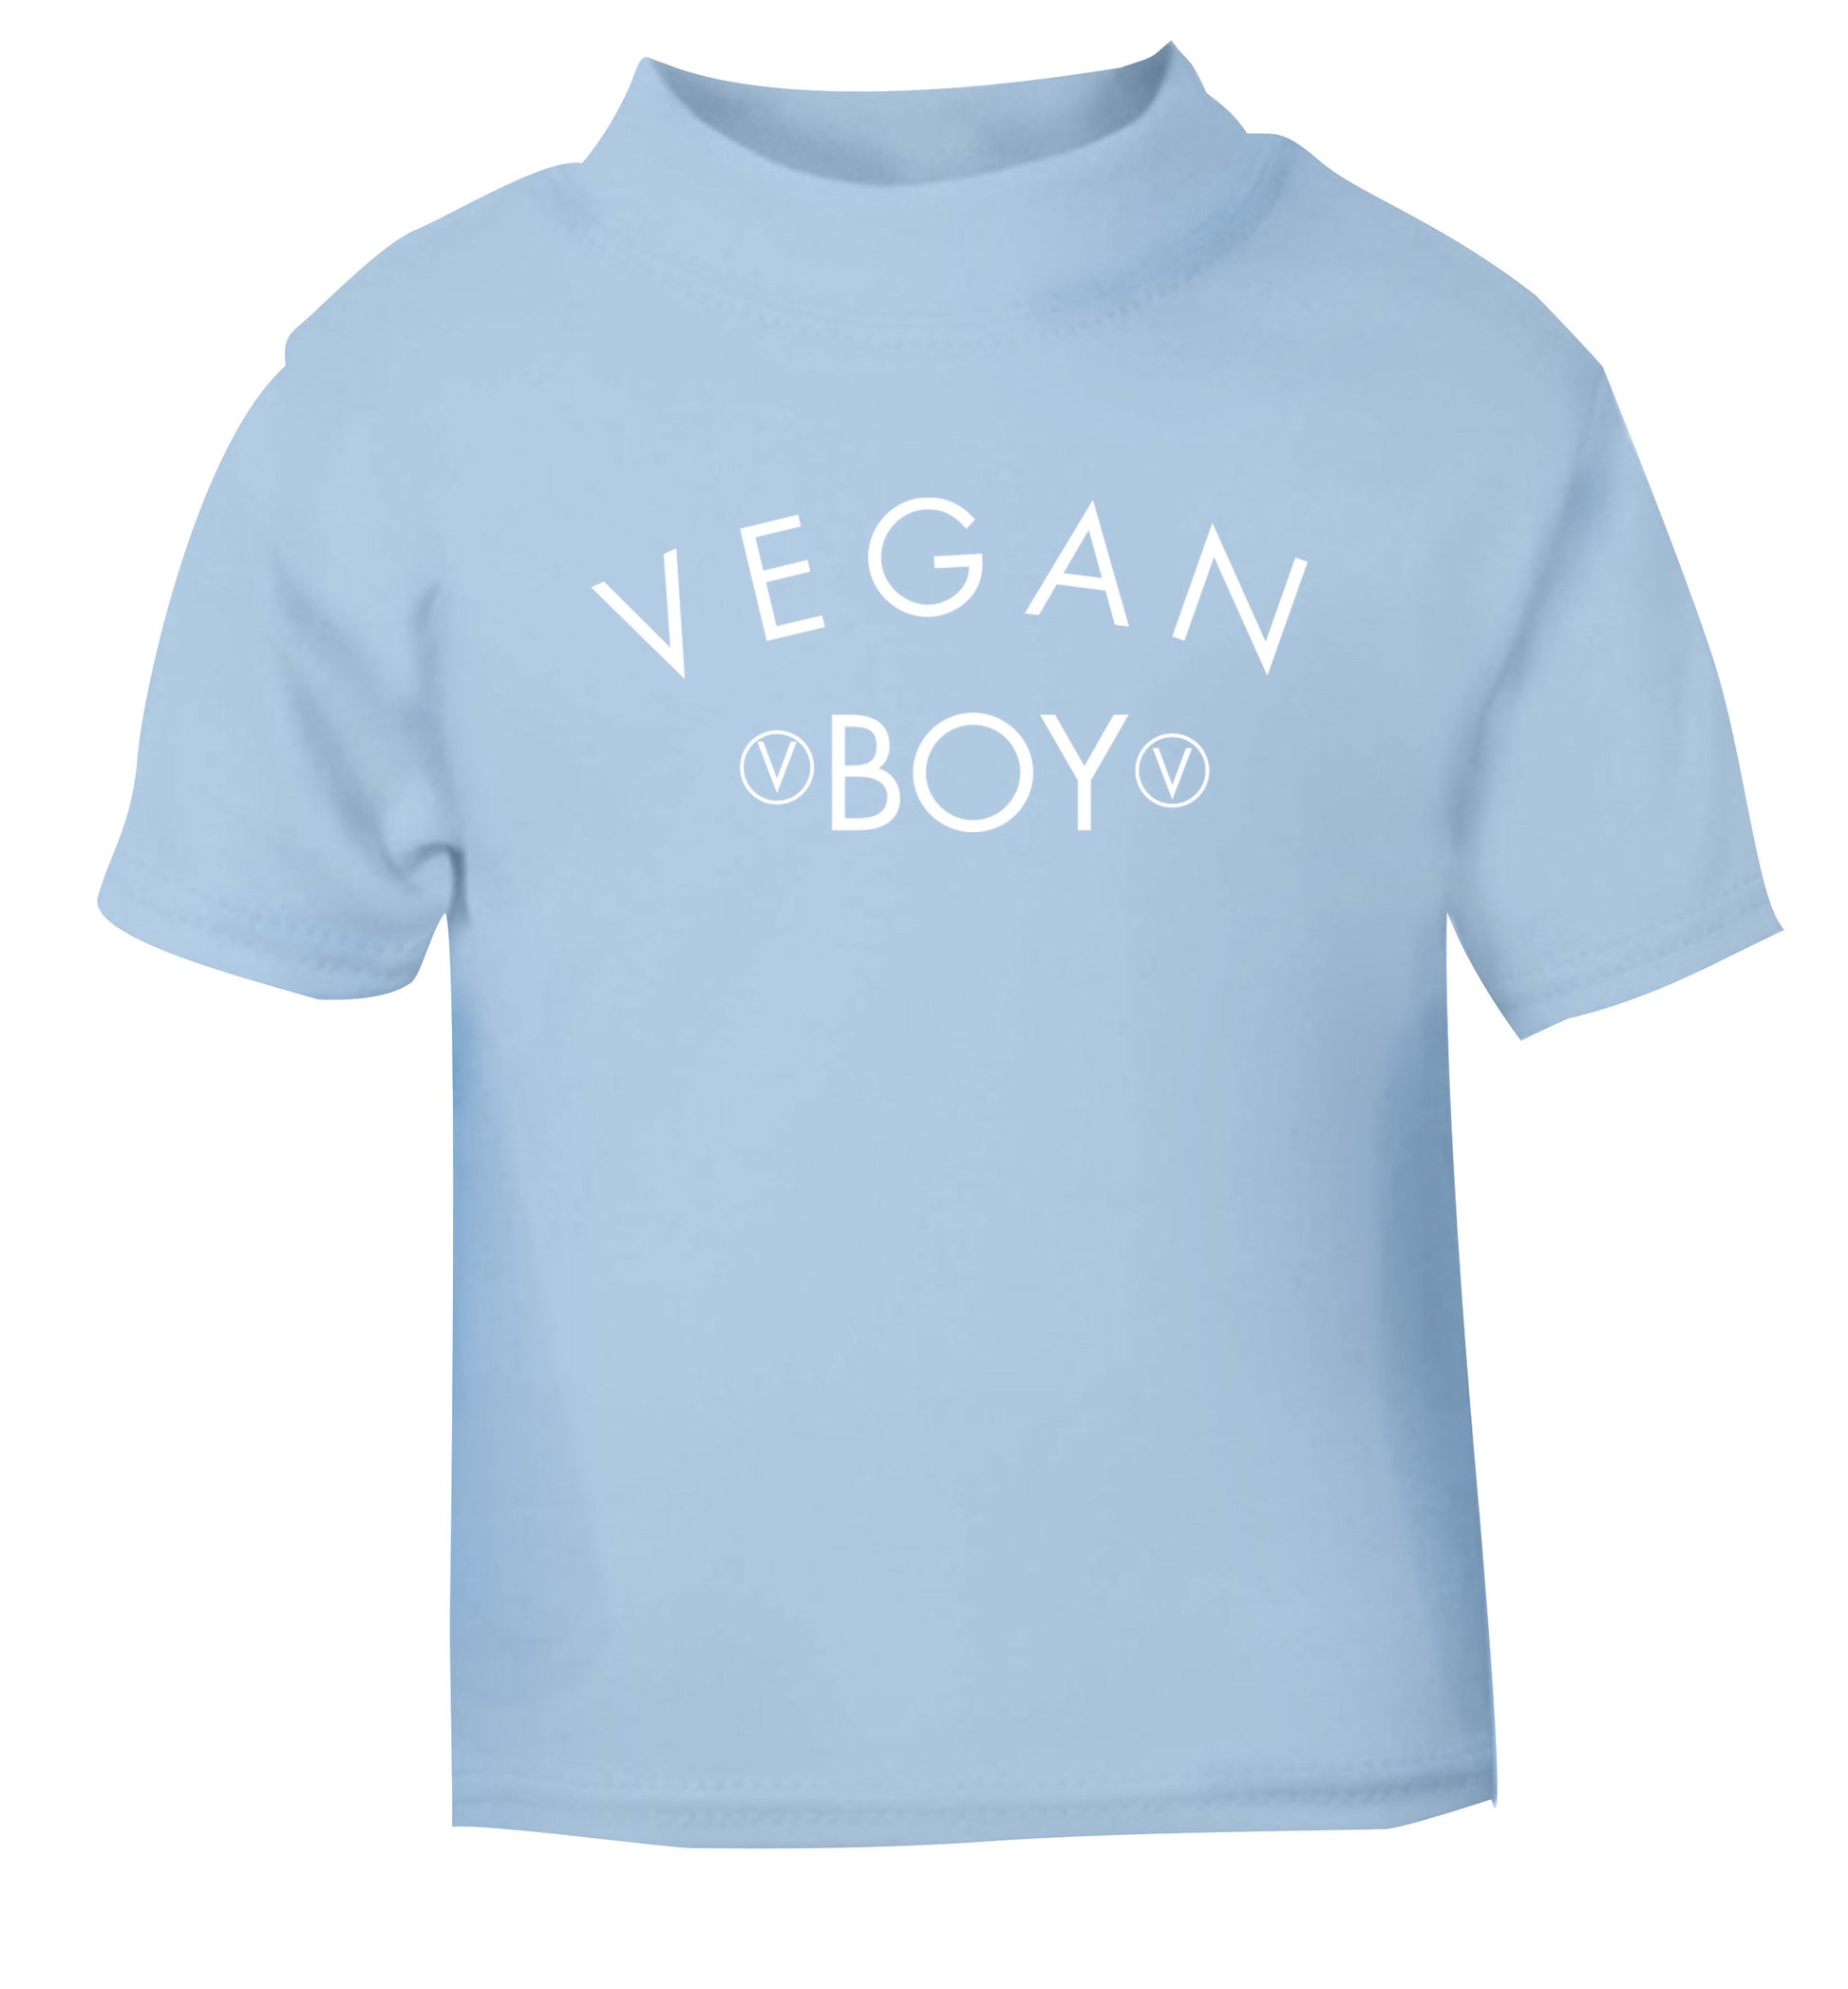 Vegan boy light blue Baby Toddler Tshirt 2 Years